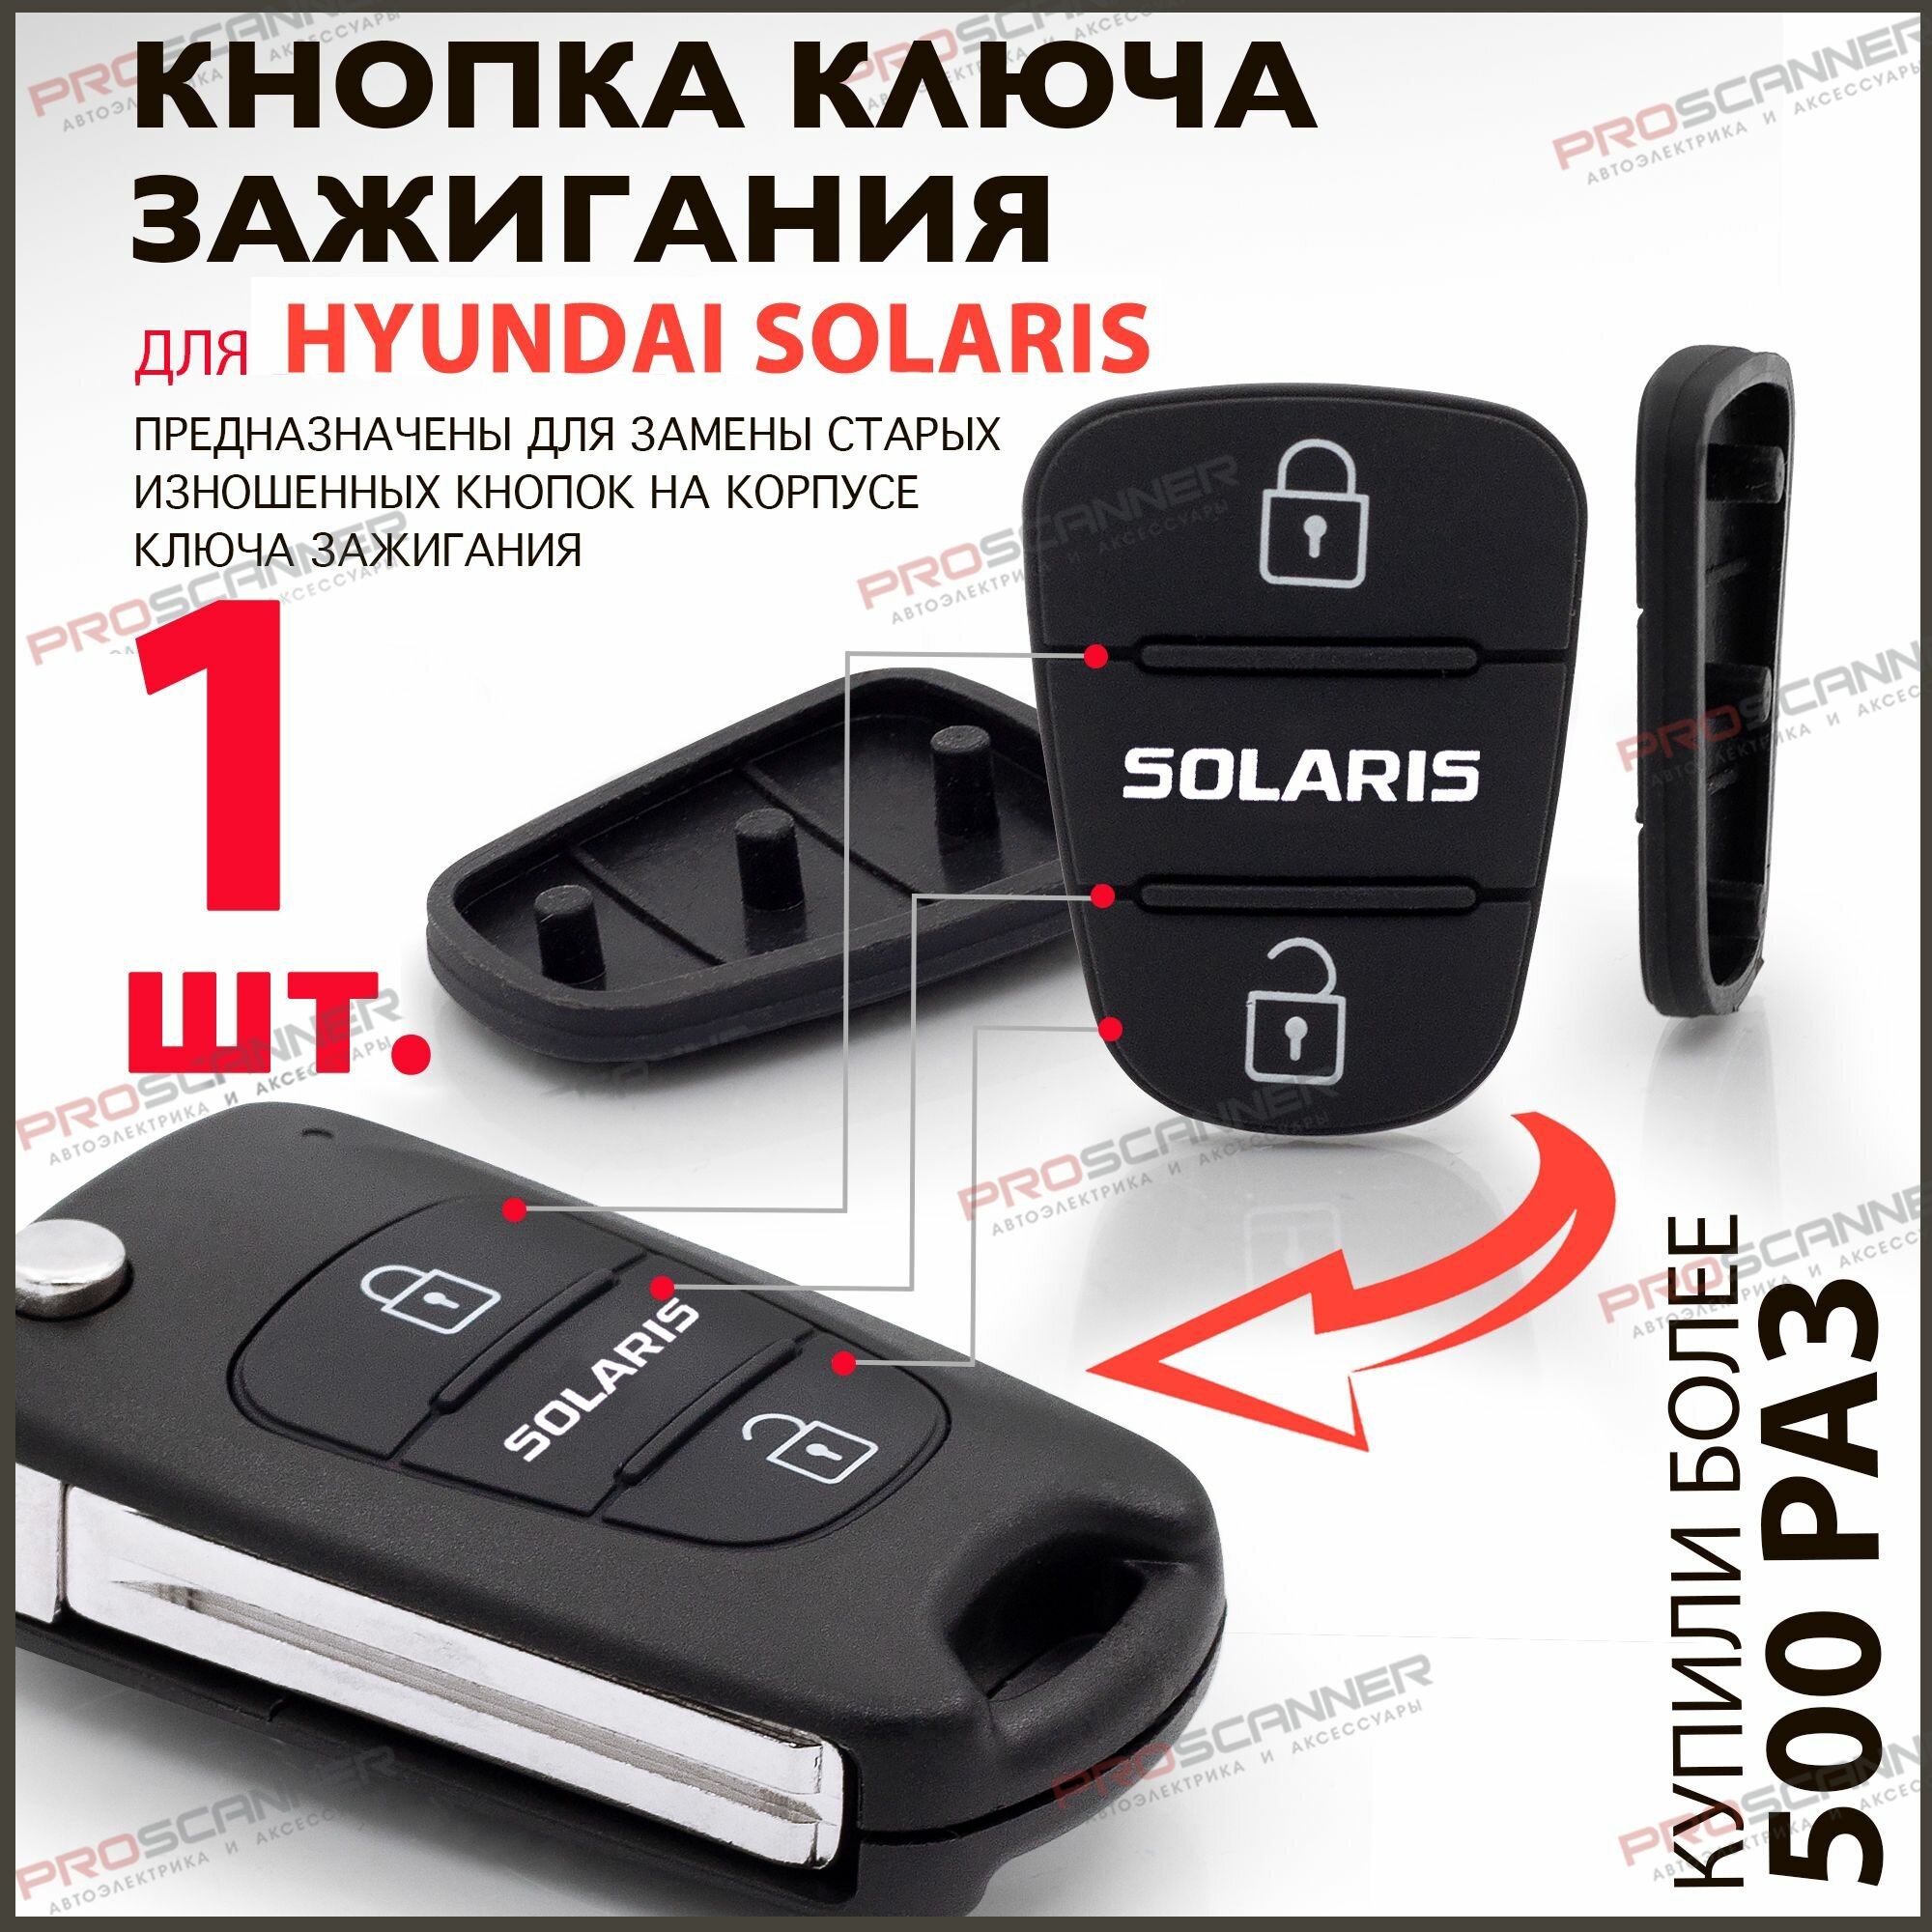 Кнопки ключа зажигания для Hyundai Solaris / Хендай Солярис - 1 штука (для 2х кнопочного ключа)